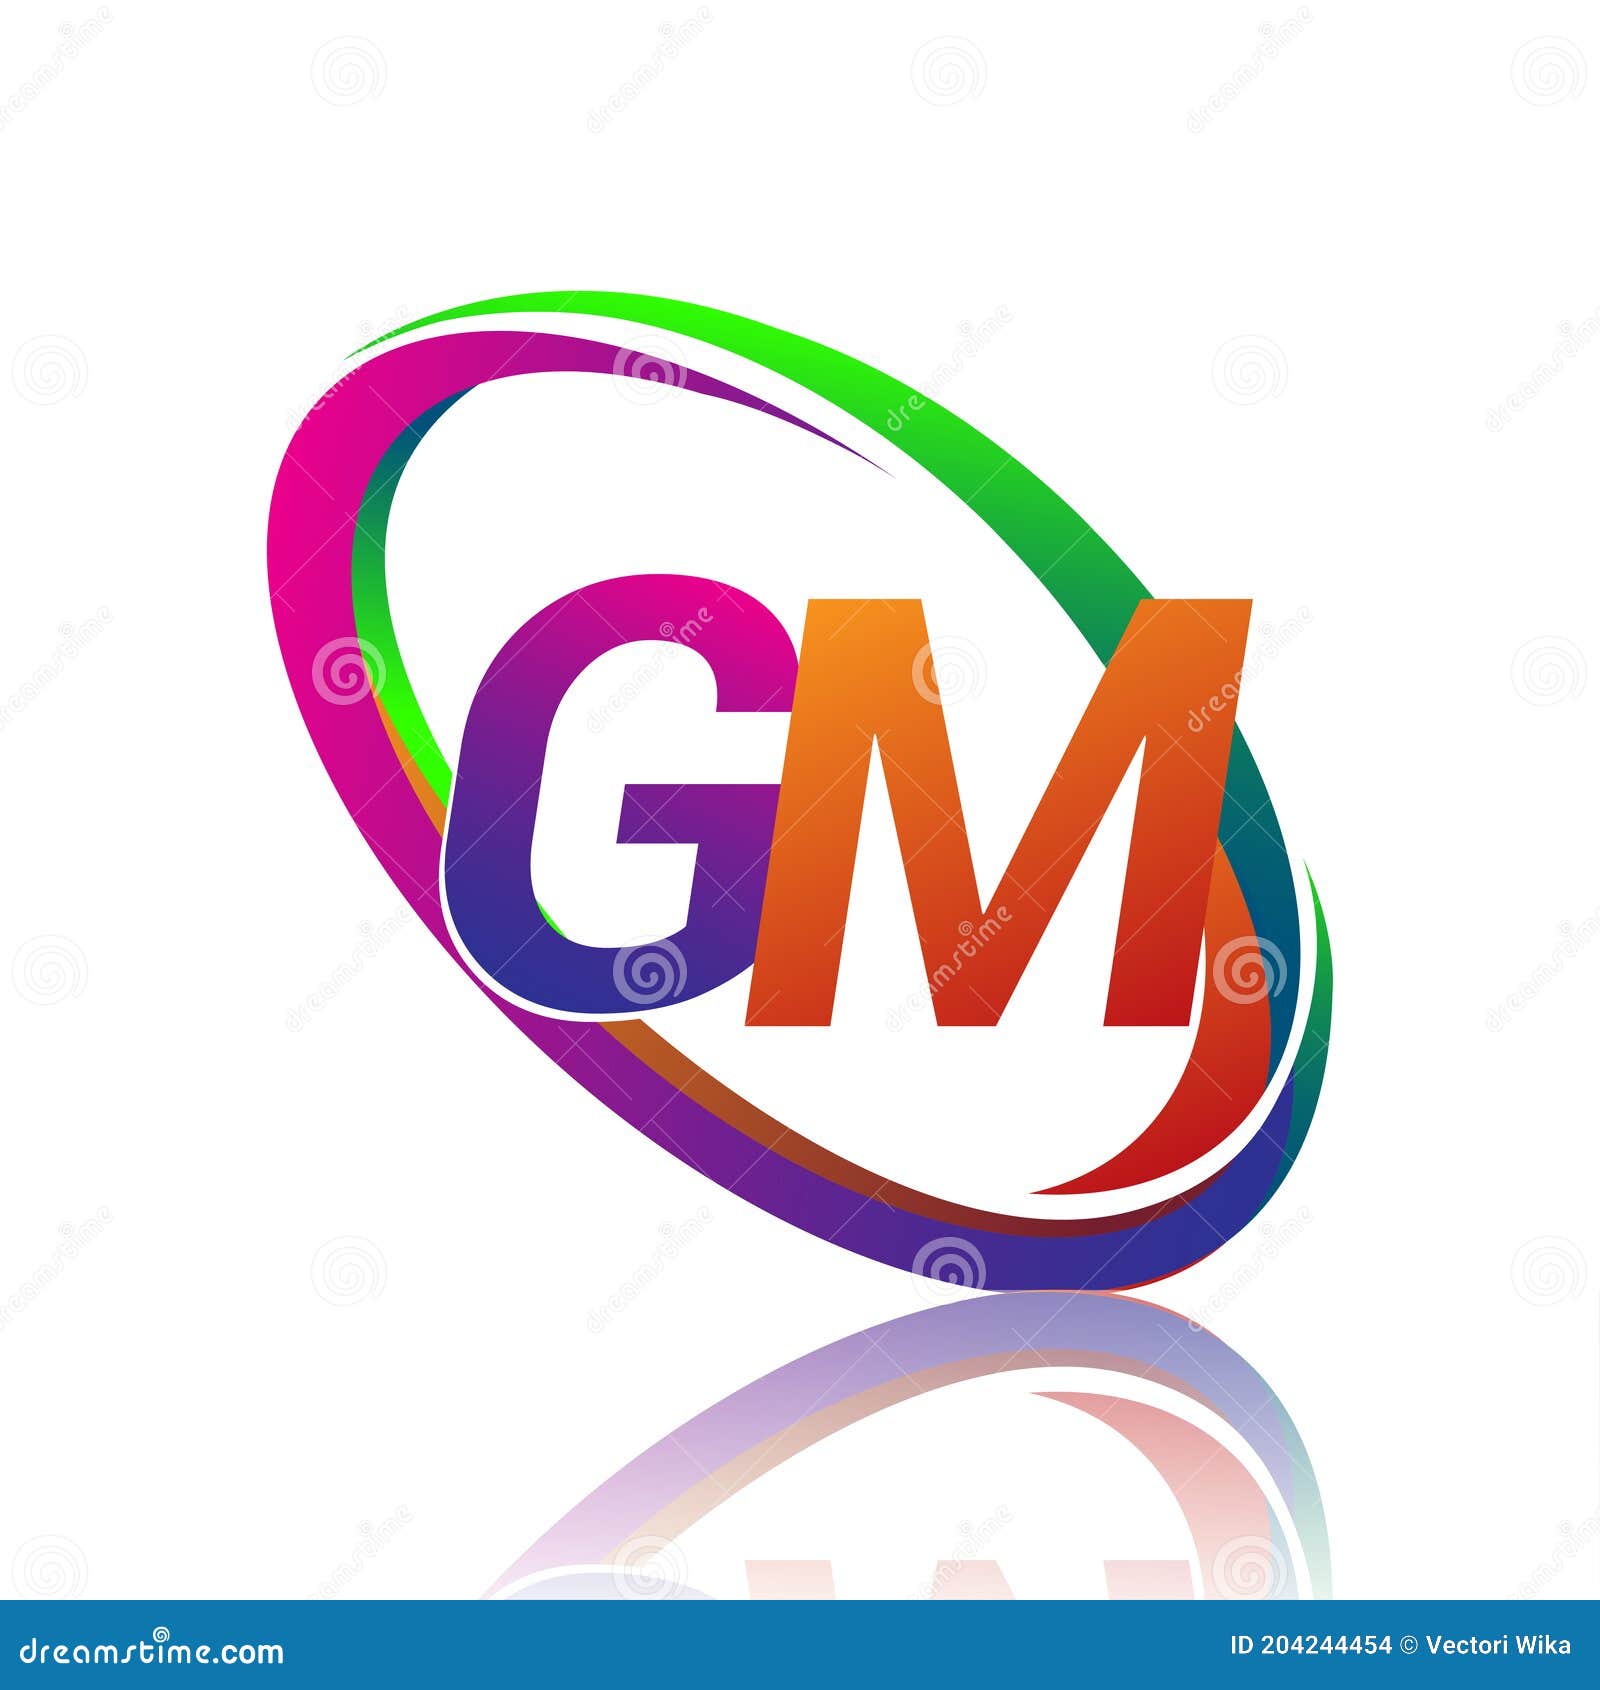 Gm g m letter design logo logotype concept Vector Image